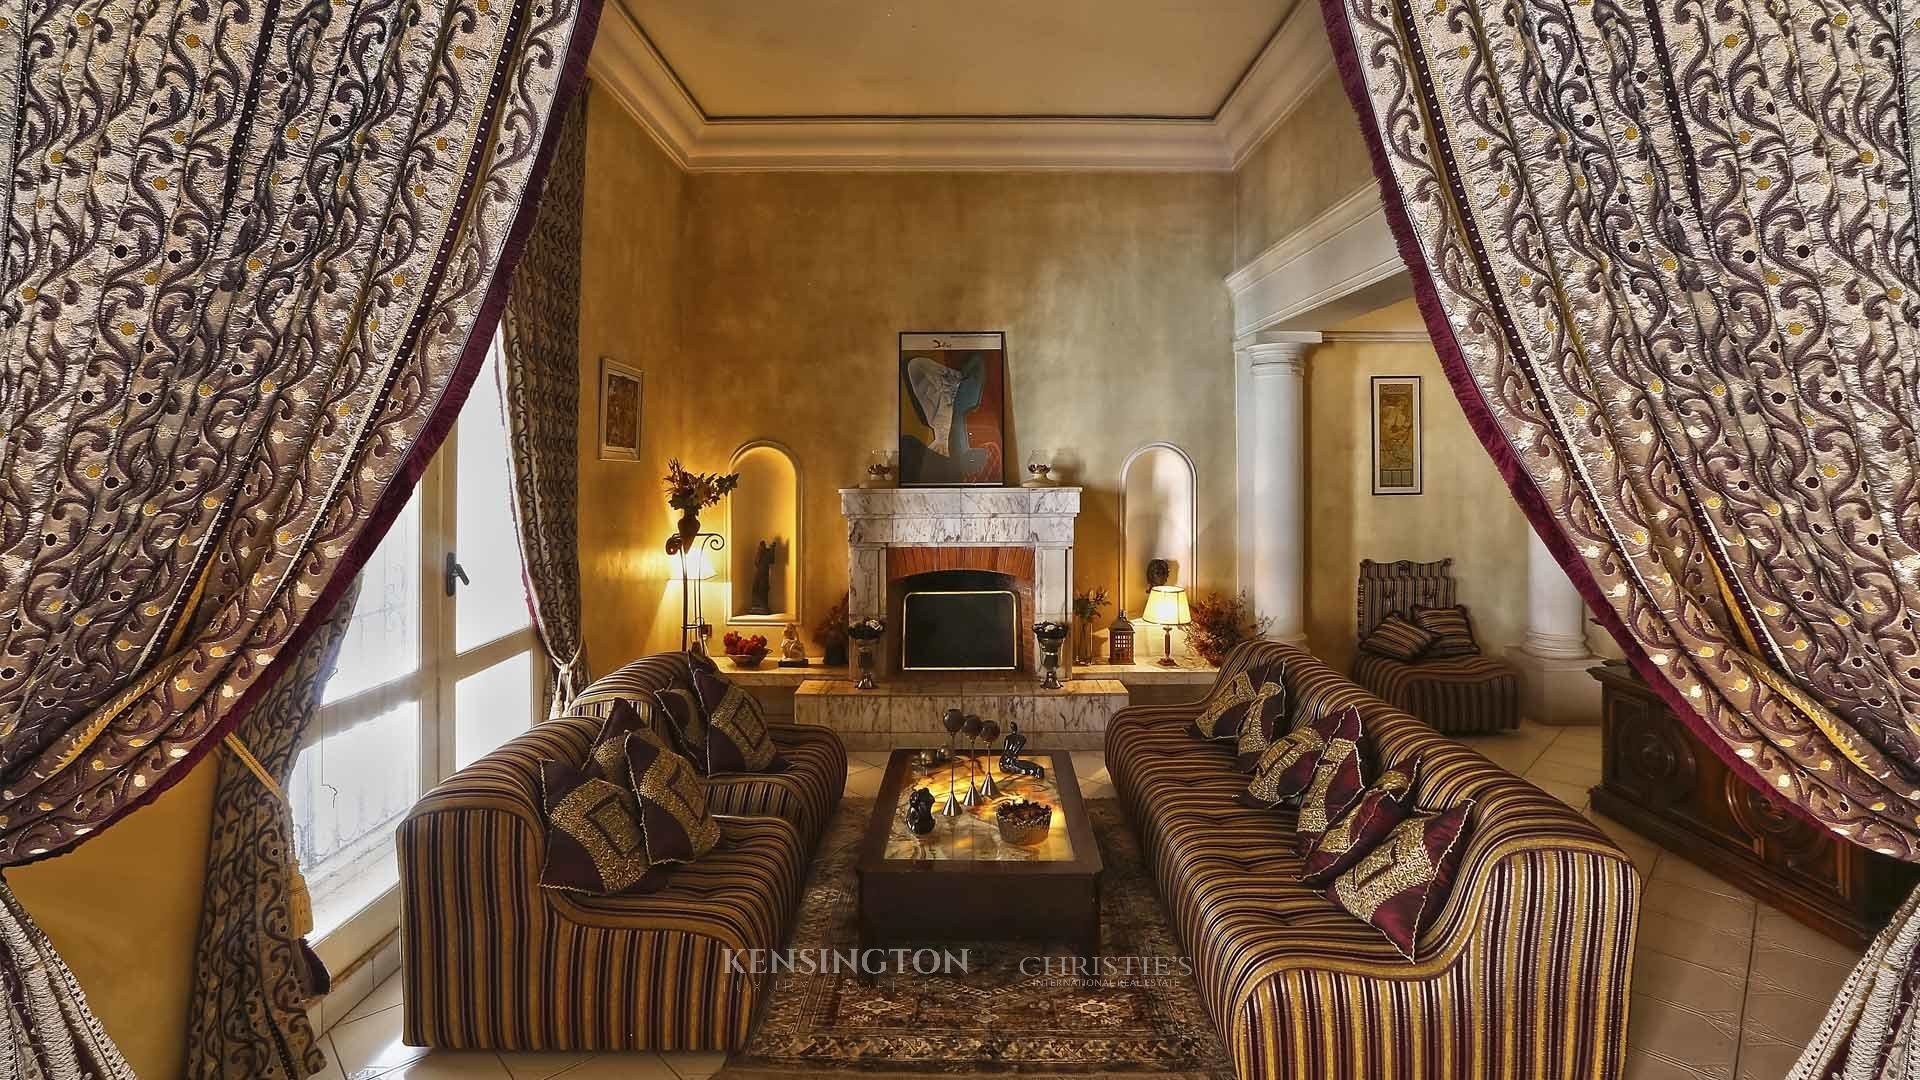 Villa Jamar in Marrakech, Morocco